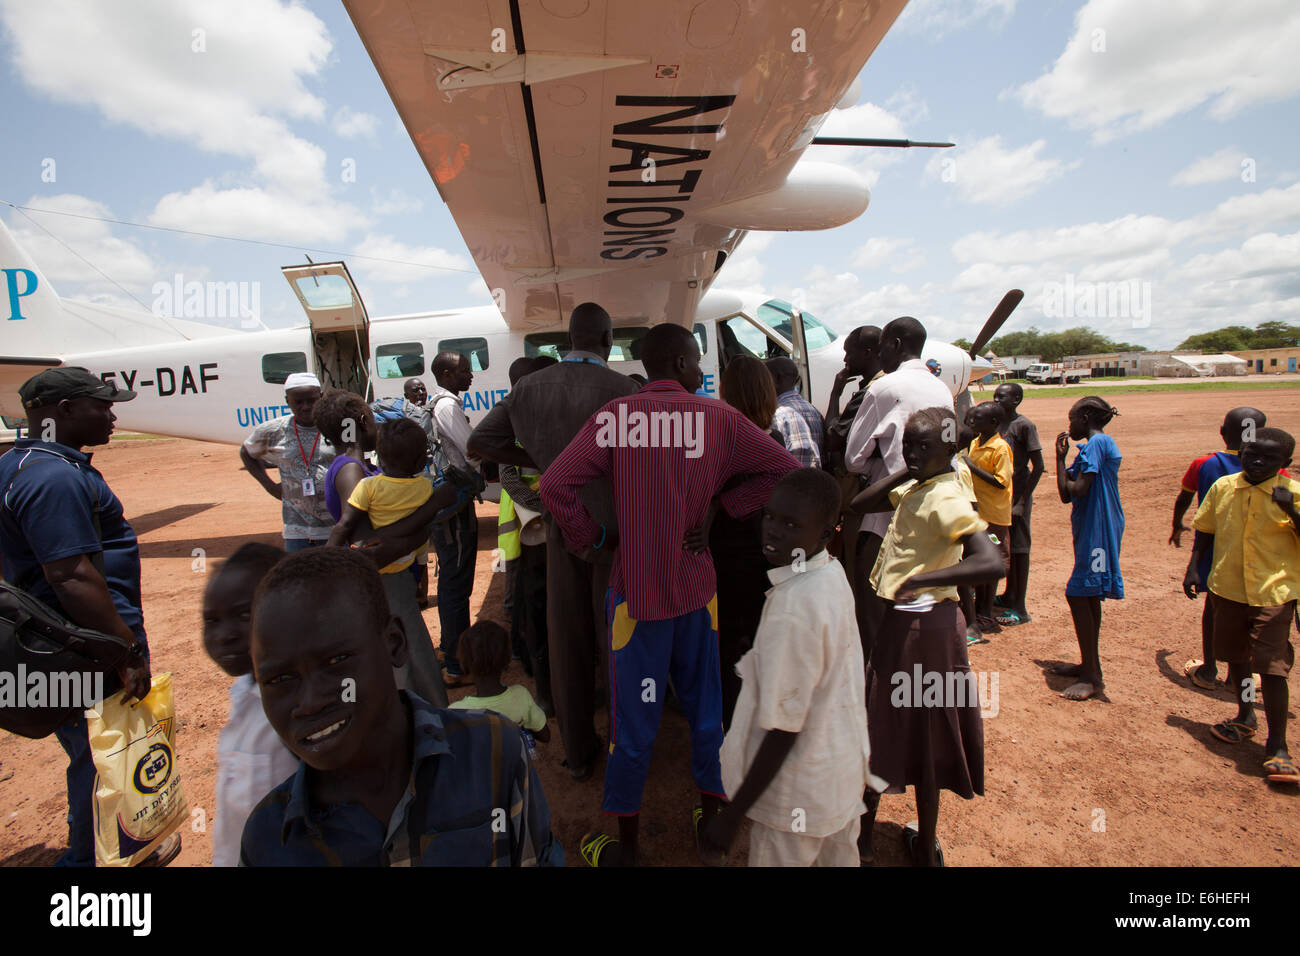 UN Humanitarian Air Services plane touches down at Agok airstrip, Abyei province, Sudan / South Sudan. Stock Photo